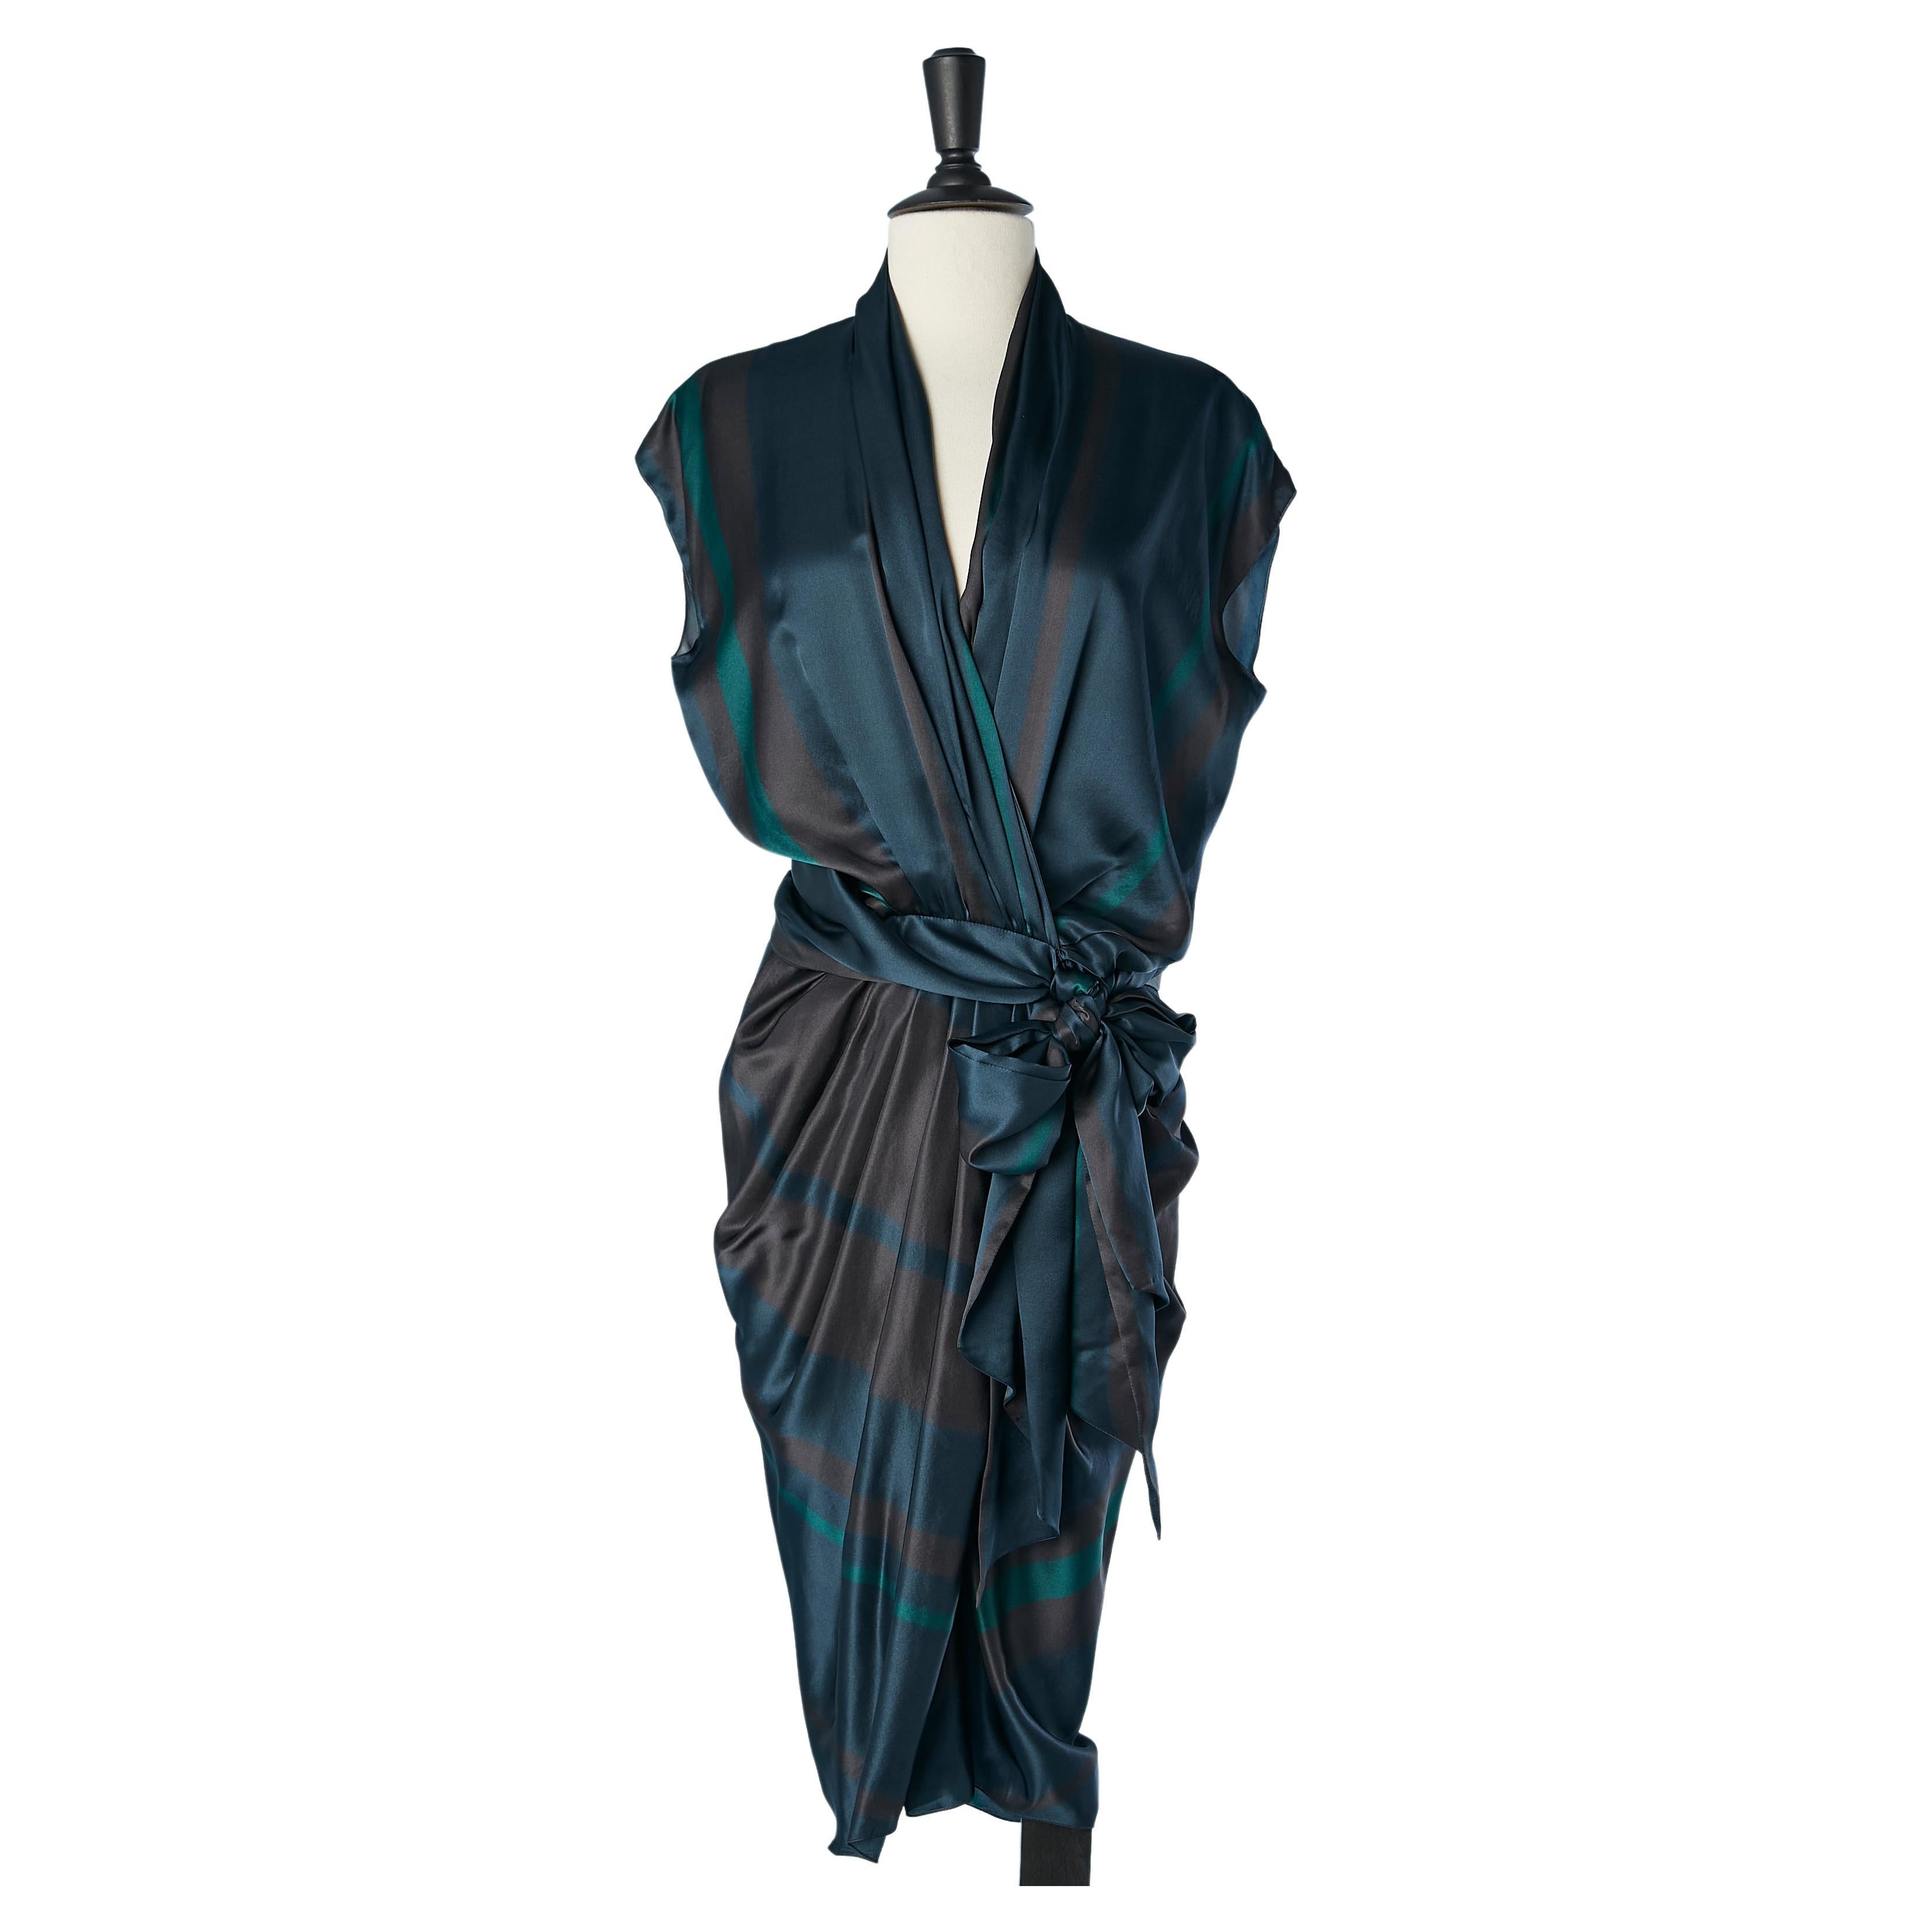 Wrap and drape silk cocktail dress with stripe pattern Lanvin by Alber Elbaz 